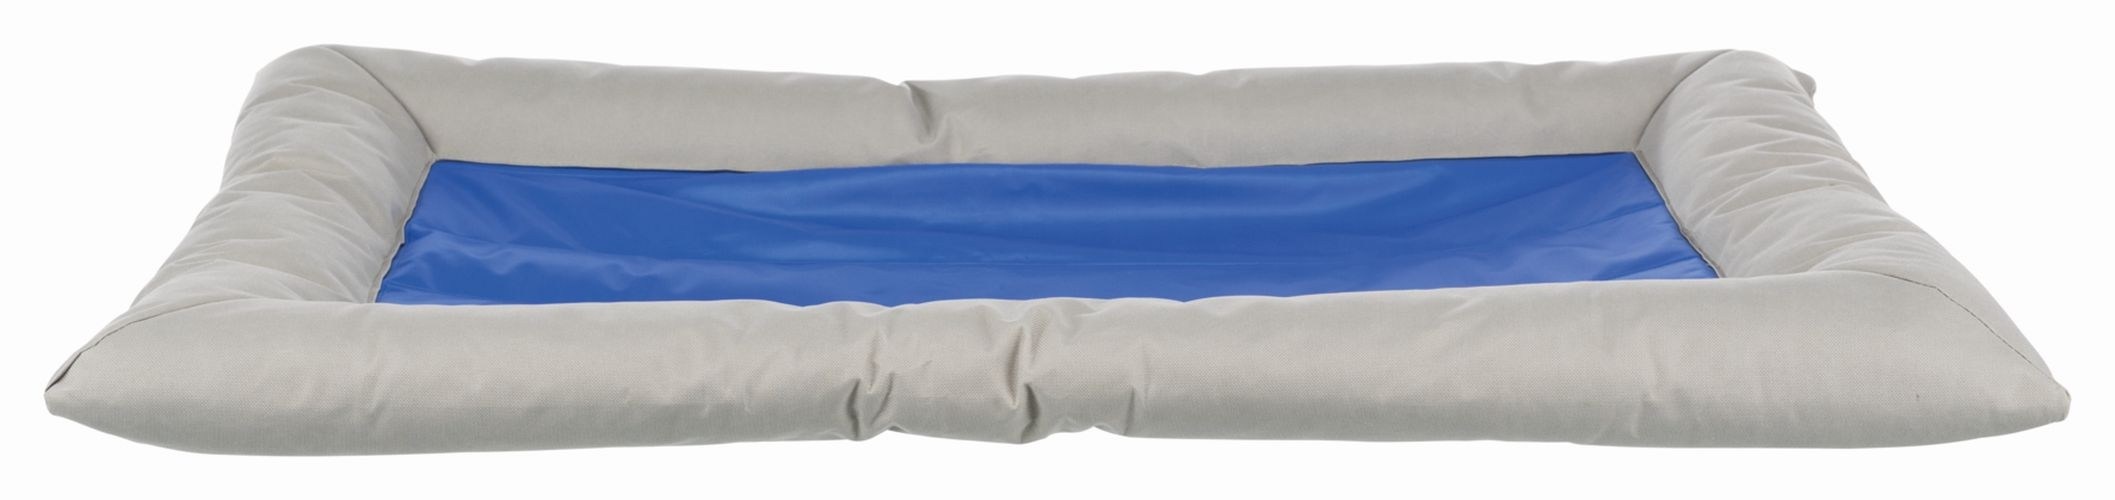 Охлаждающий лежак Cool Dreamer, 75 х 50 см, серый/синий  БЕЗ ВОДЫ